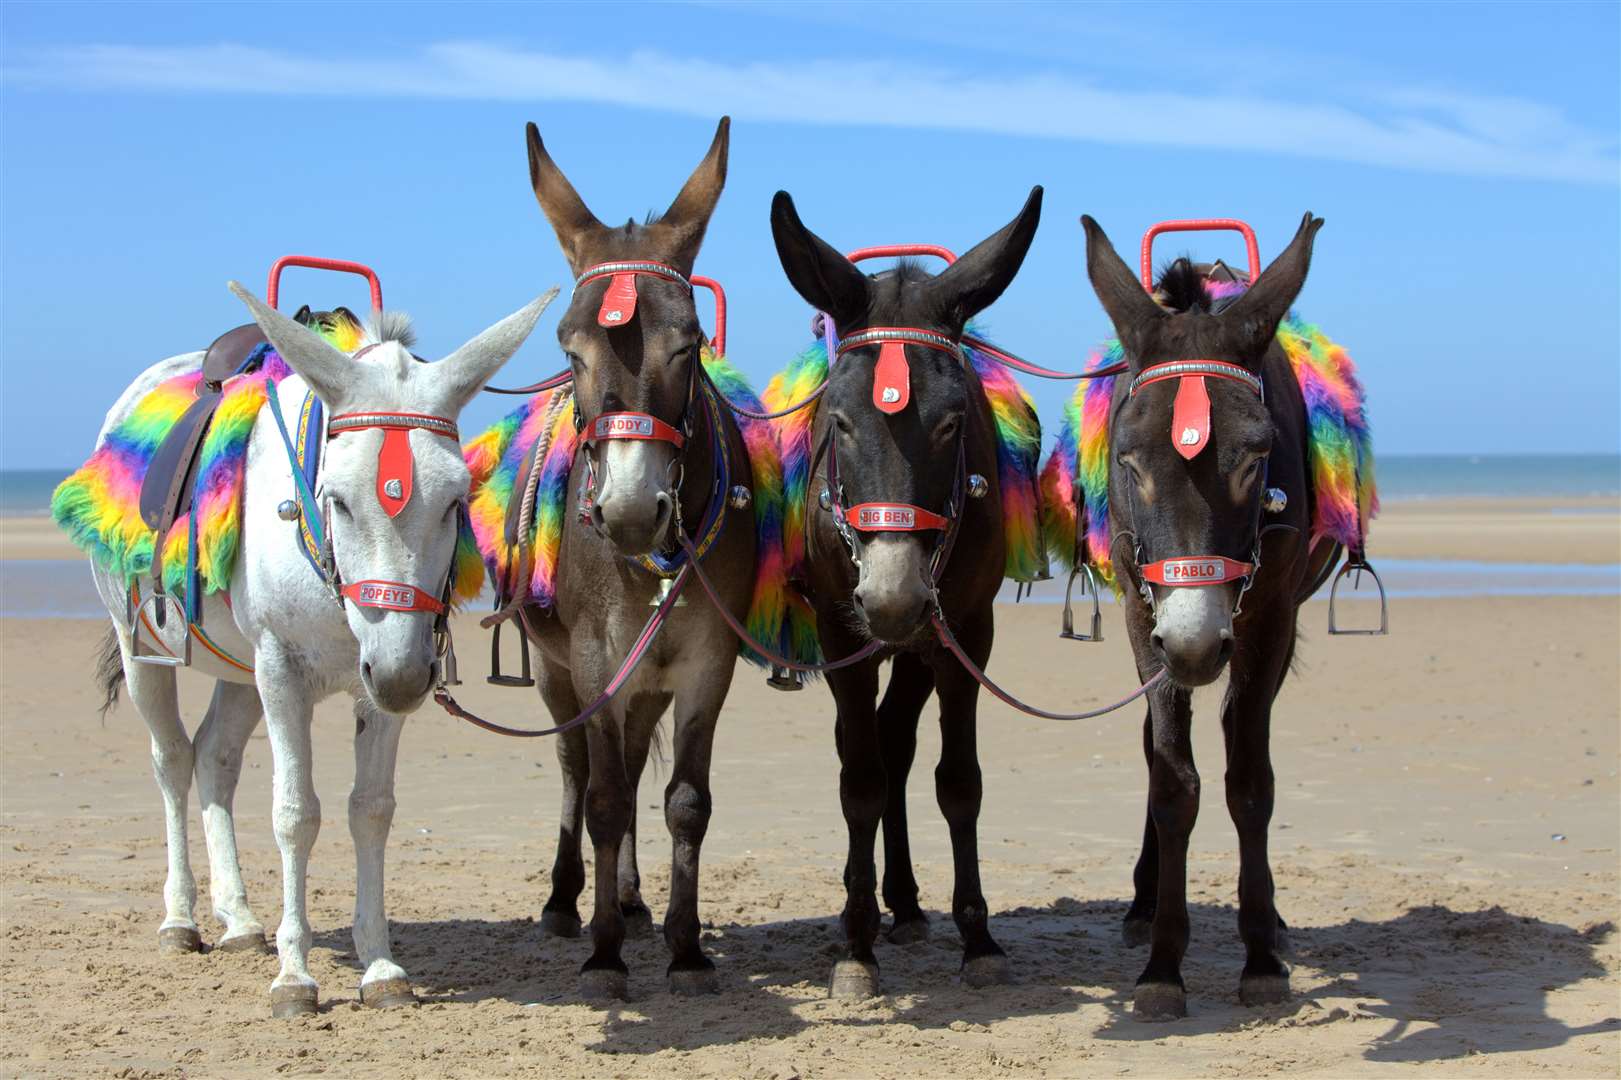 Donkeys at a beach resort in UK